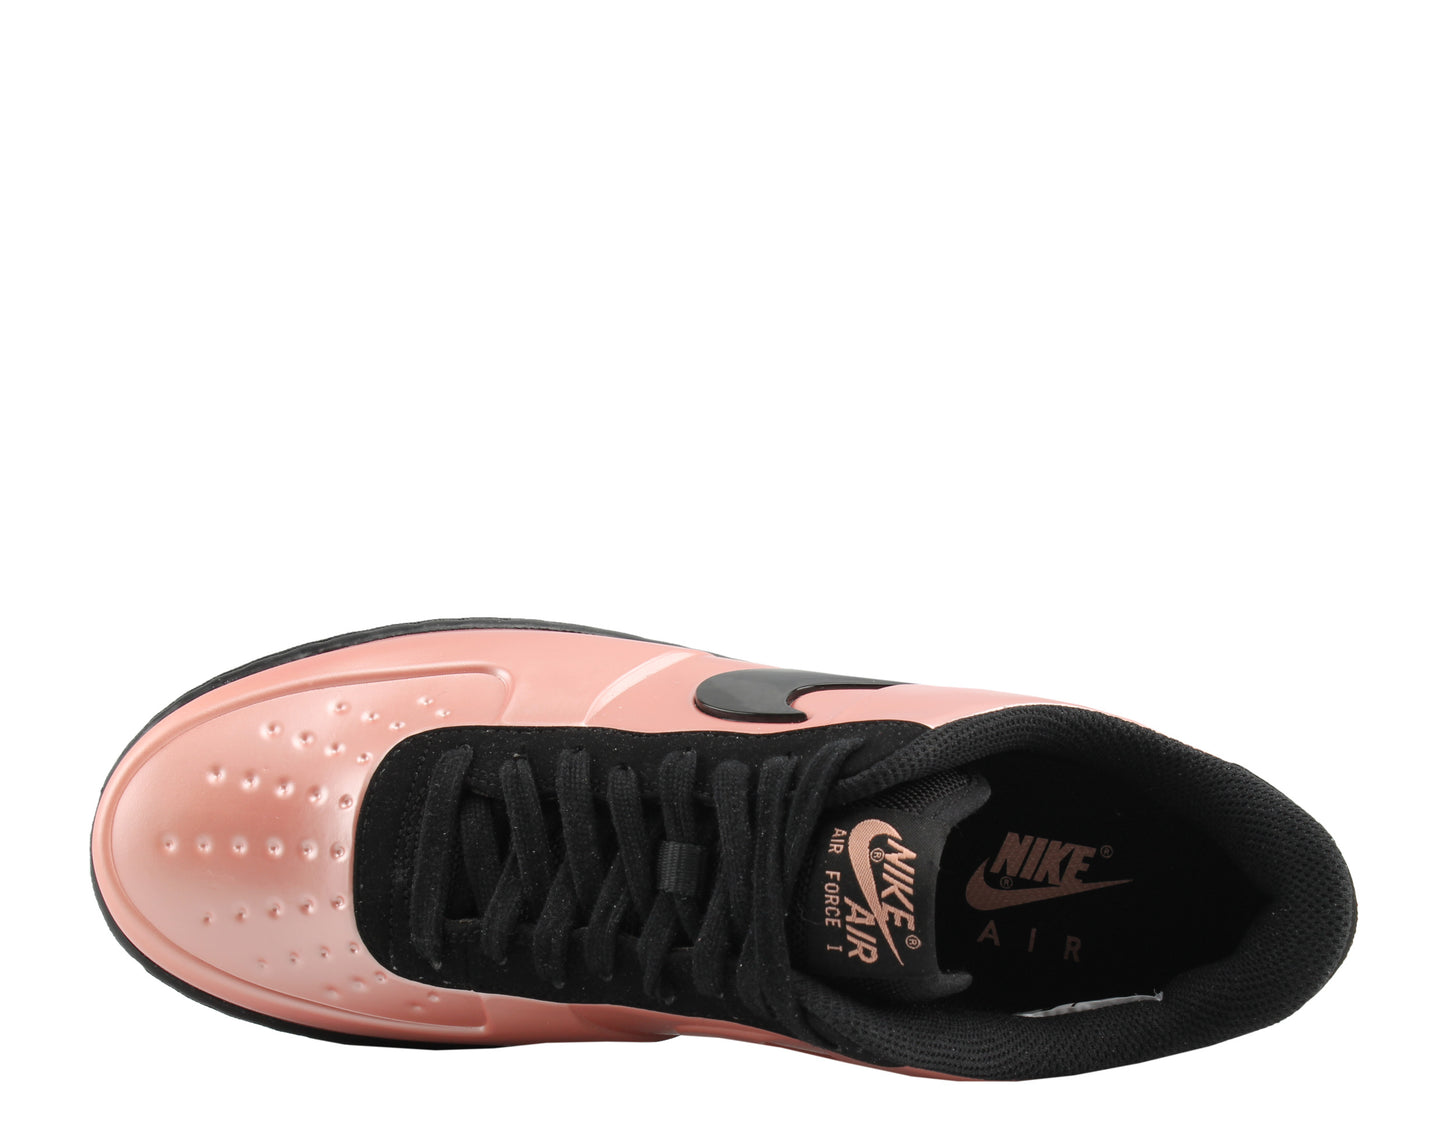 Nike AF1 Foamposite Pro Cup Rust Pink Men's Basketball Shoes AJ3664-600